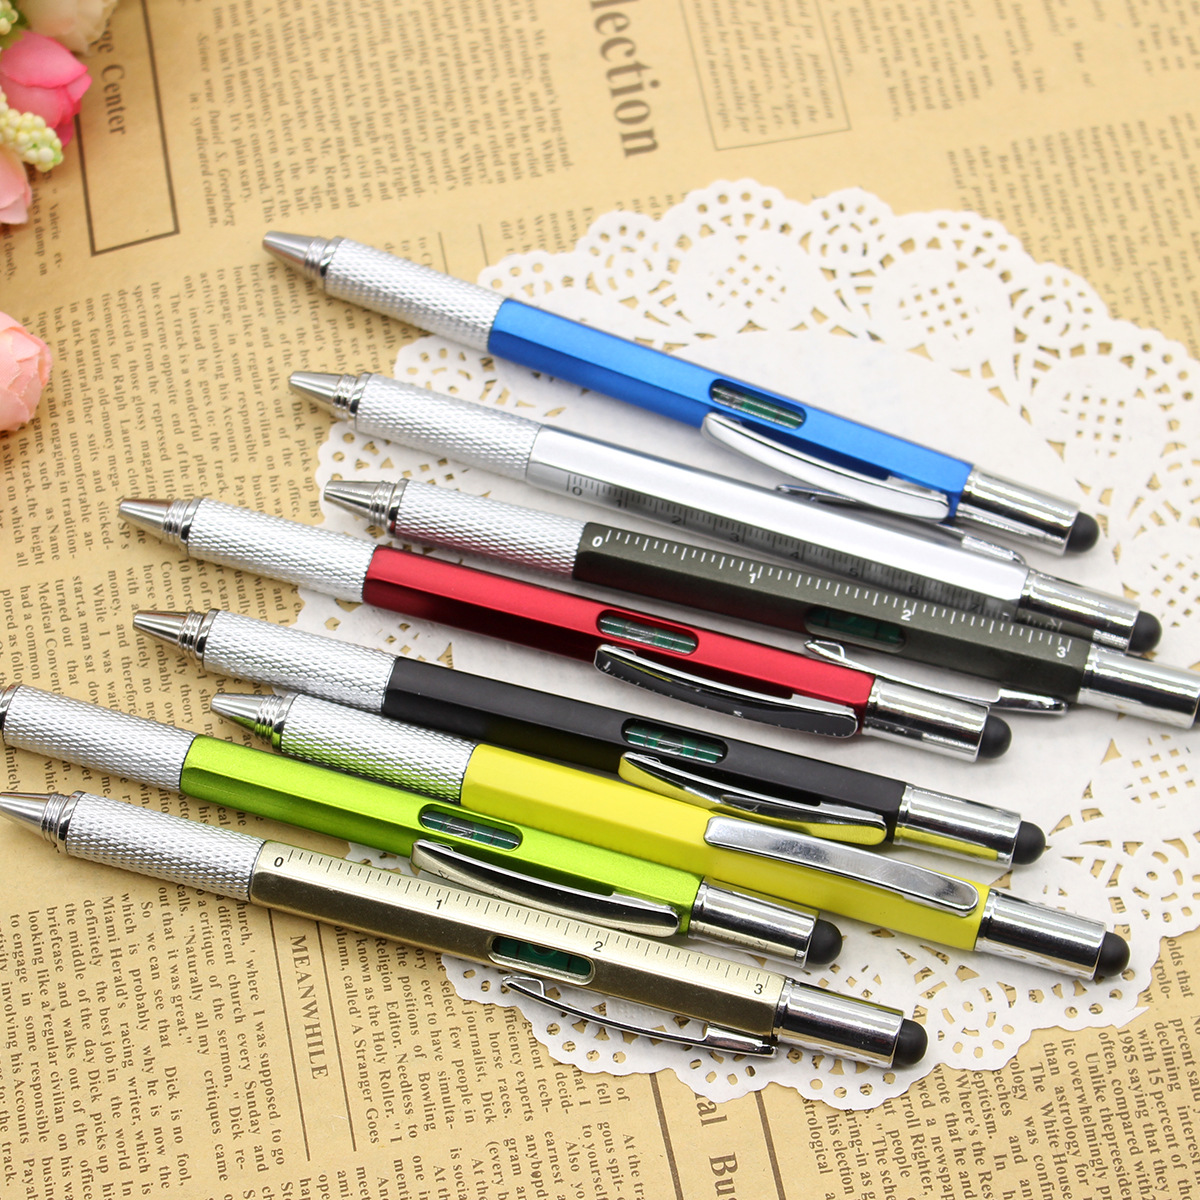 Novel Multifunctional 6 In 1 Pen Screwdriver Ruler Metal Tool Gift For School office supplie stationery pen